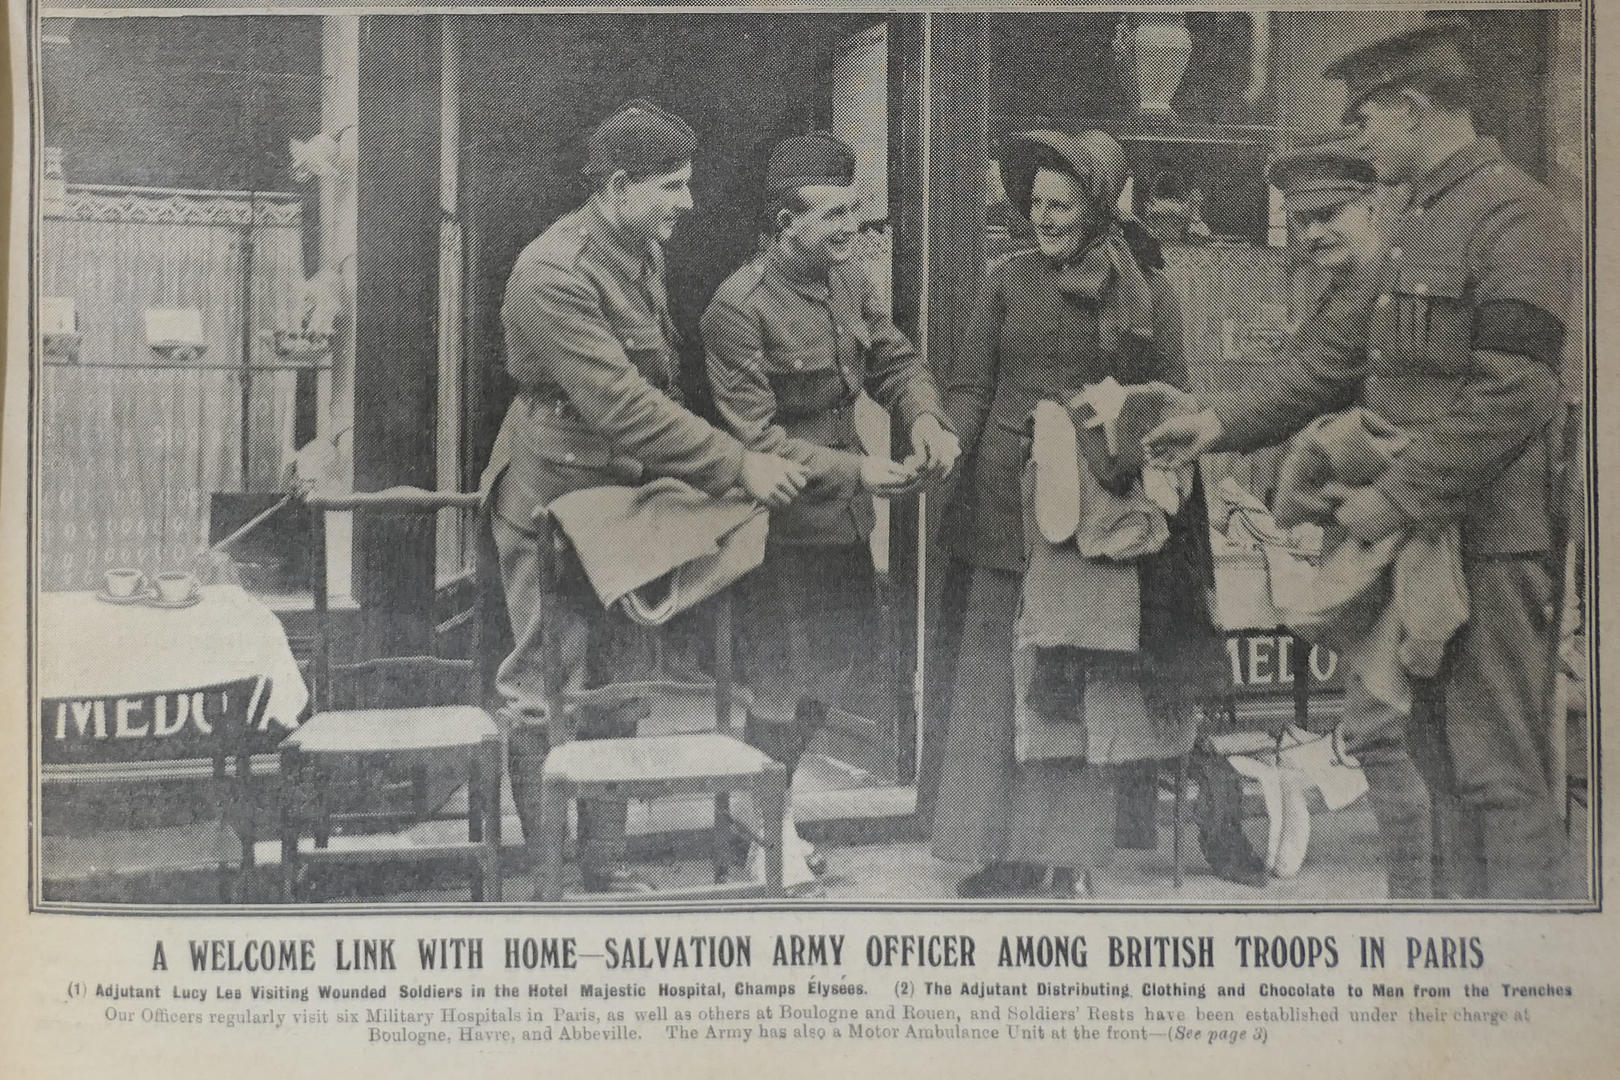 Image showing Adjutant Lucy Lee distributing garments to servicemen